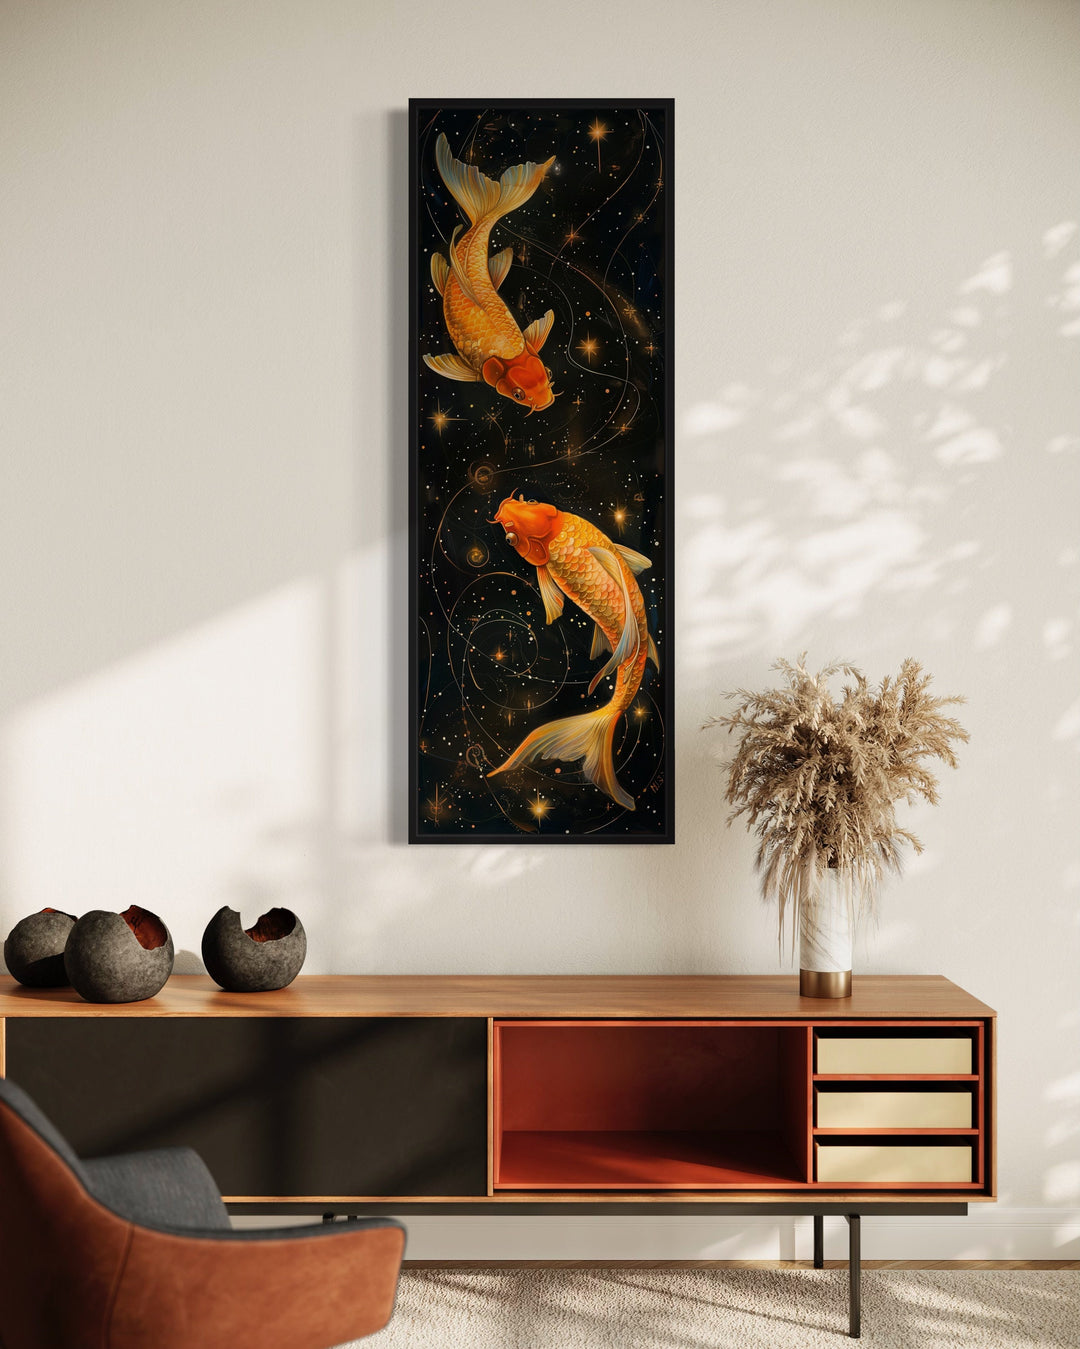 Tall Narrow Gold Fish On Black Vertical Wall Art Aqua Gleam" over modern furniture